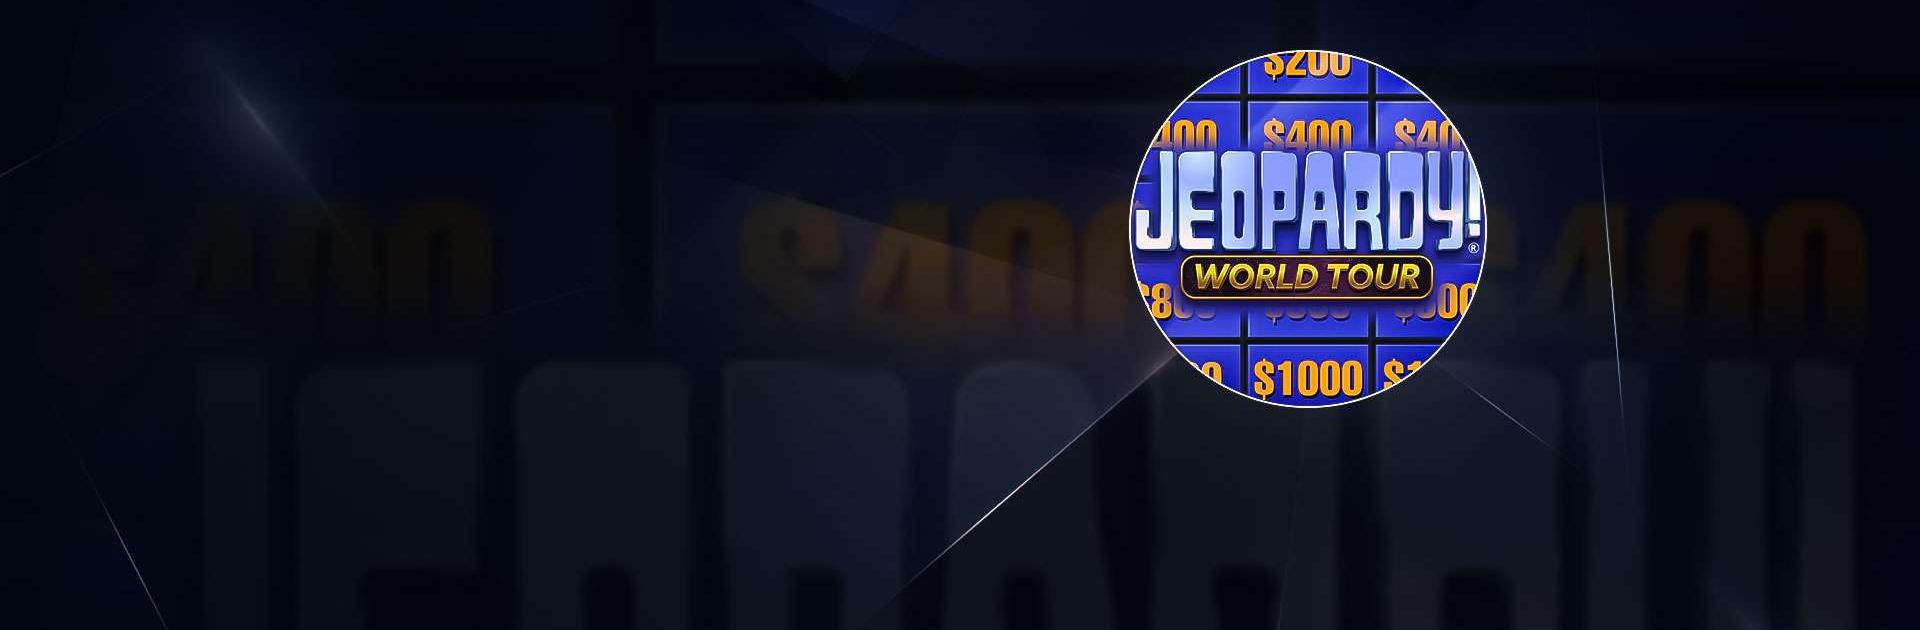 Jeopardy! Trivia TV Game Show